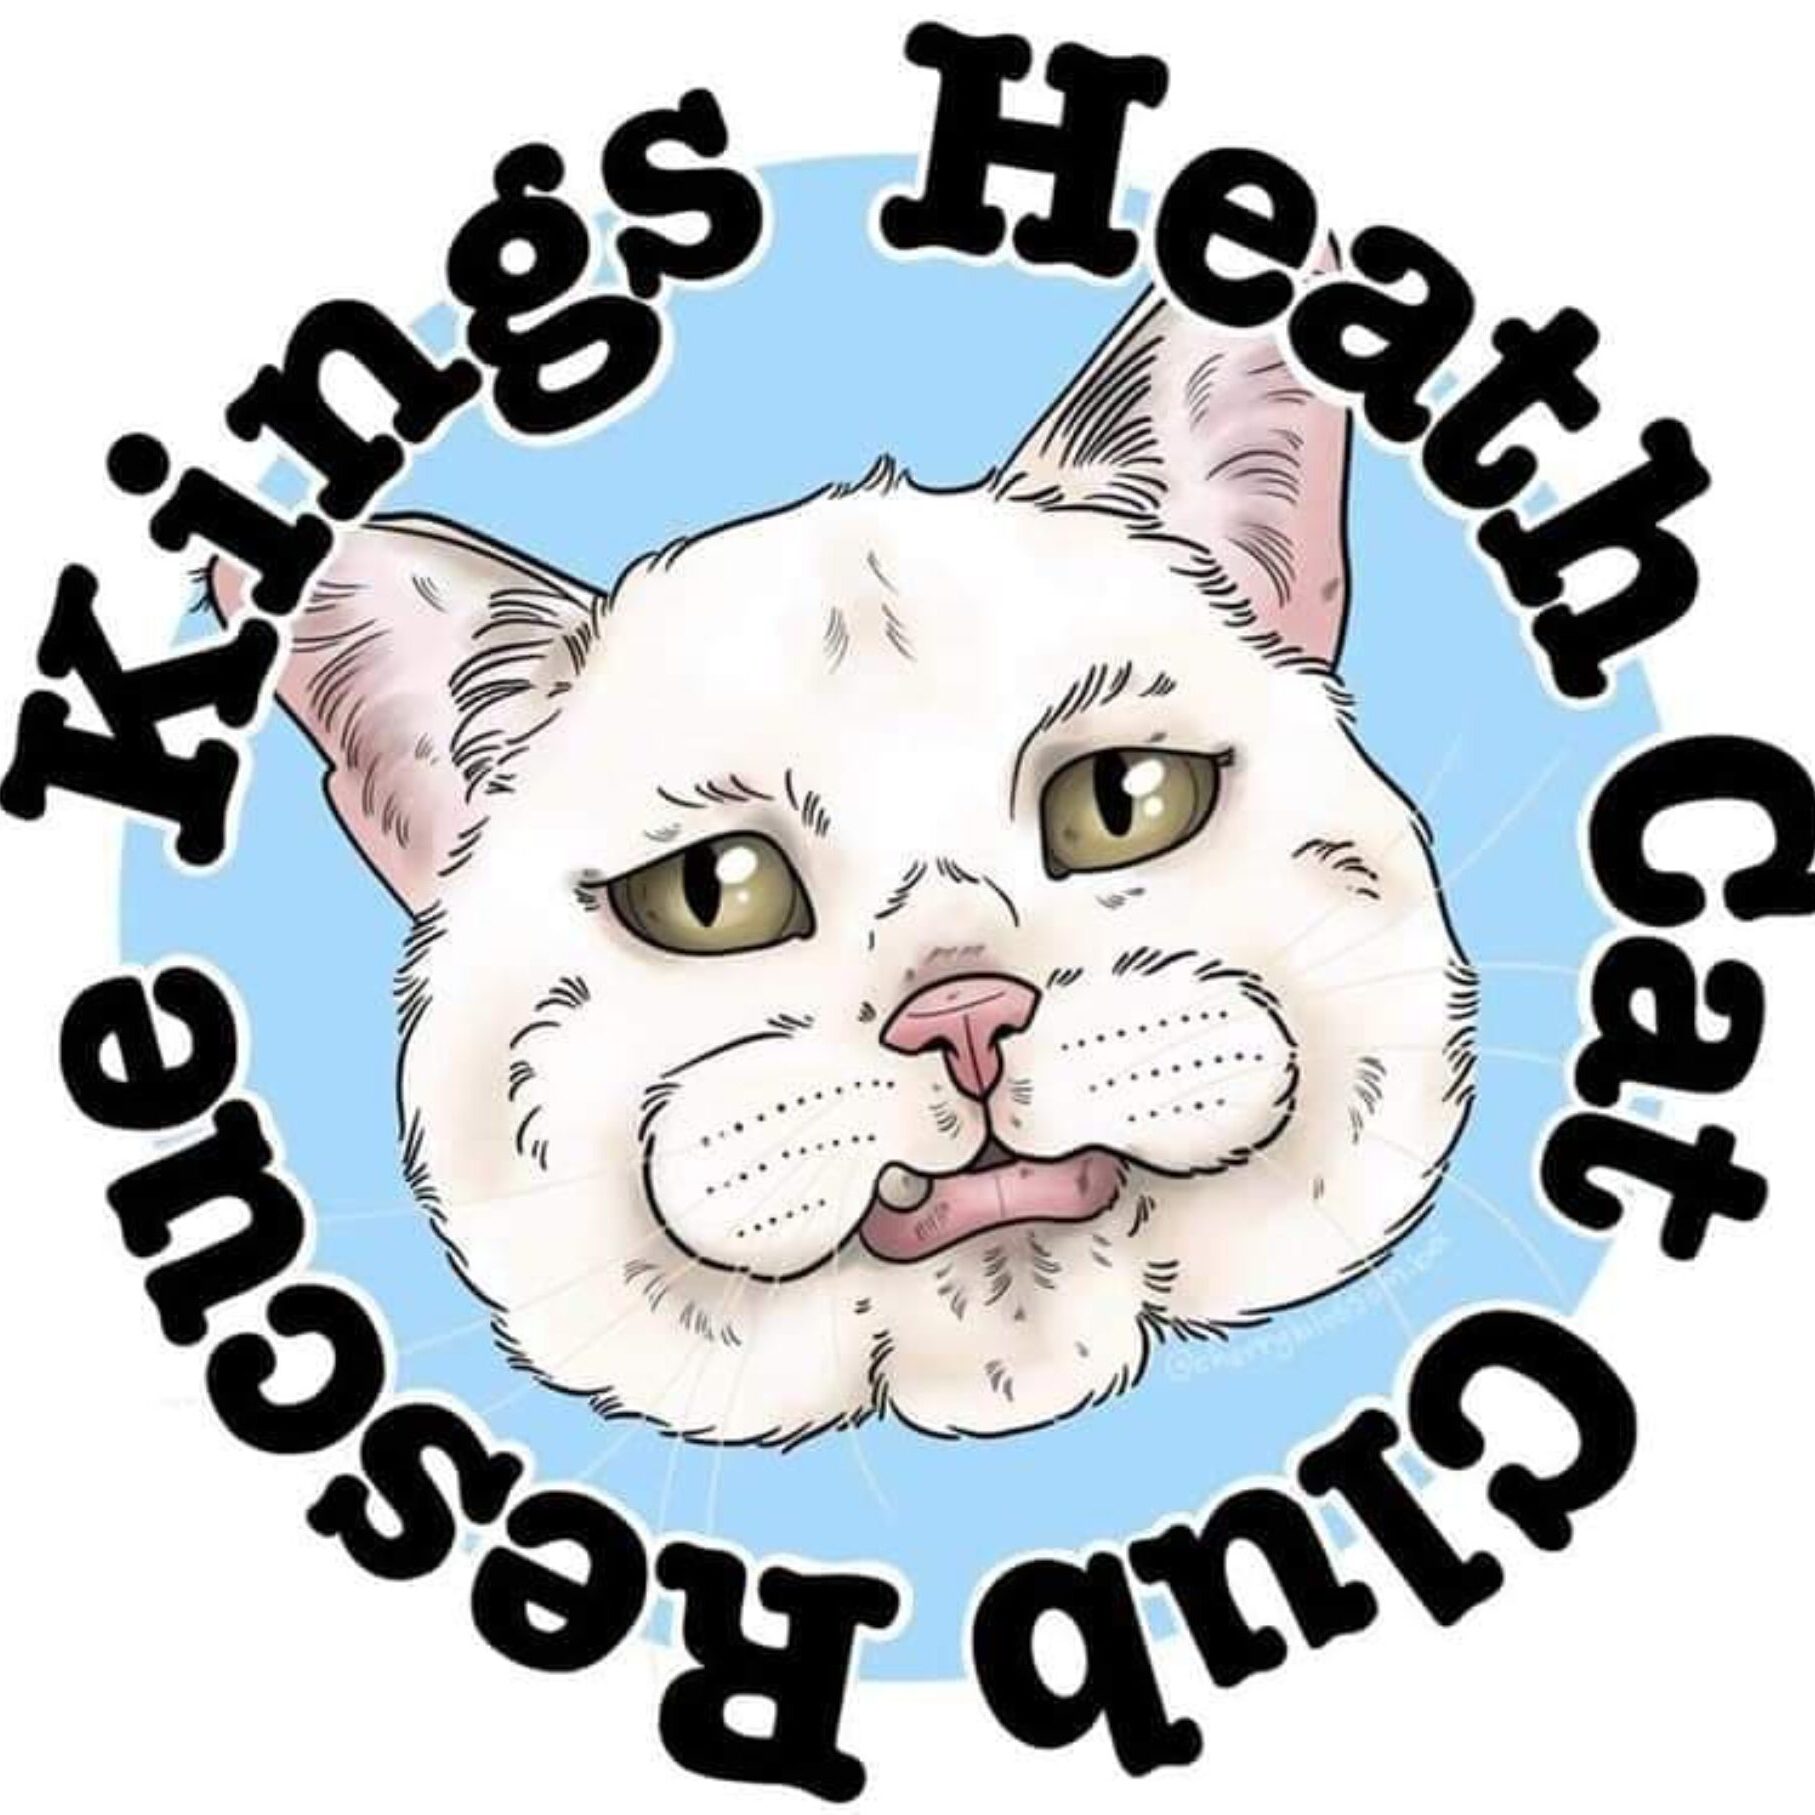 Kings Heath Cat Club